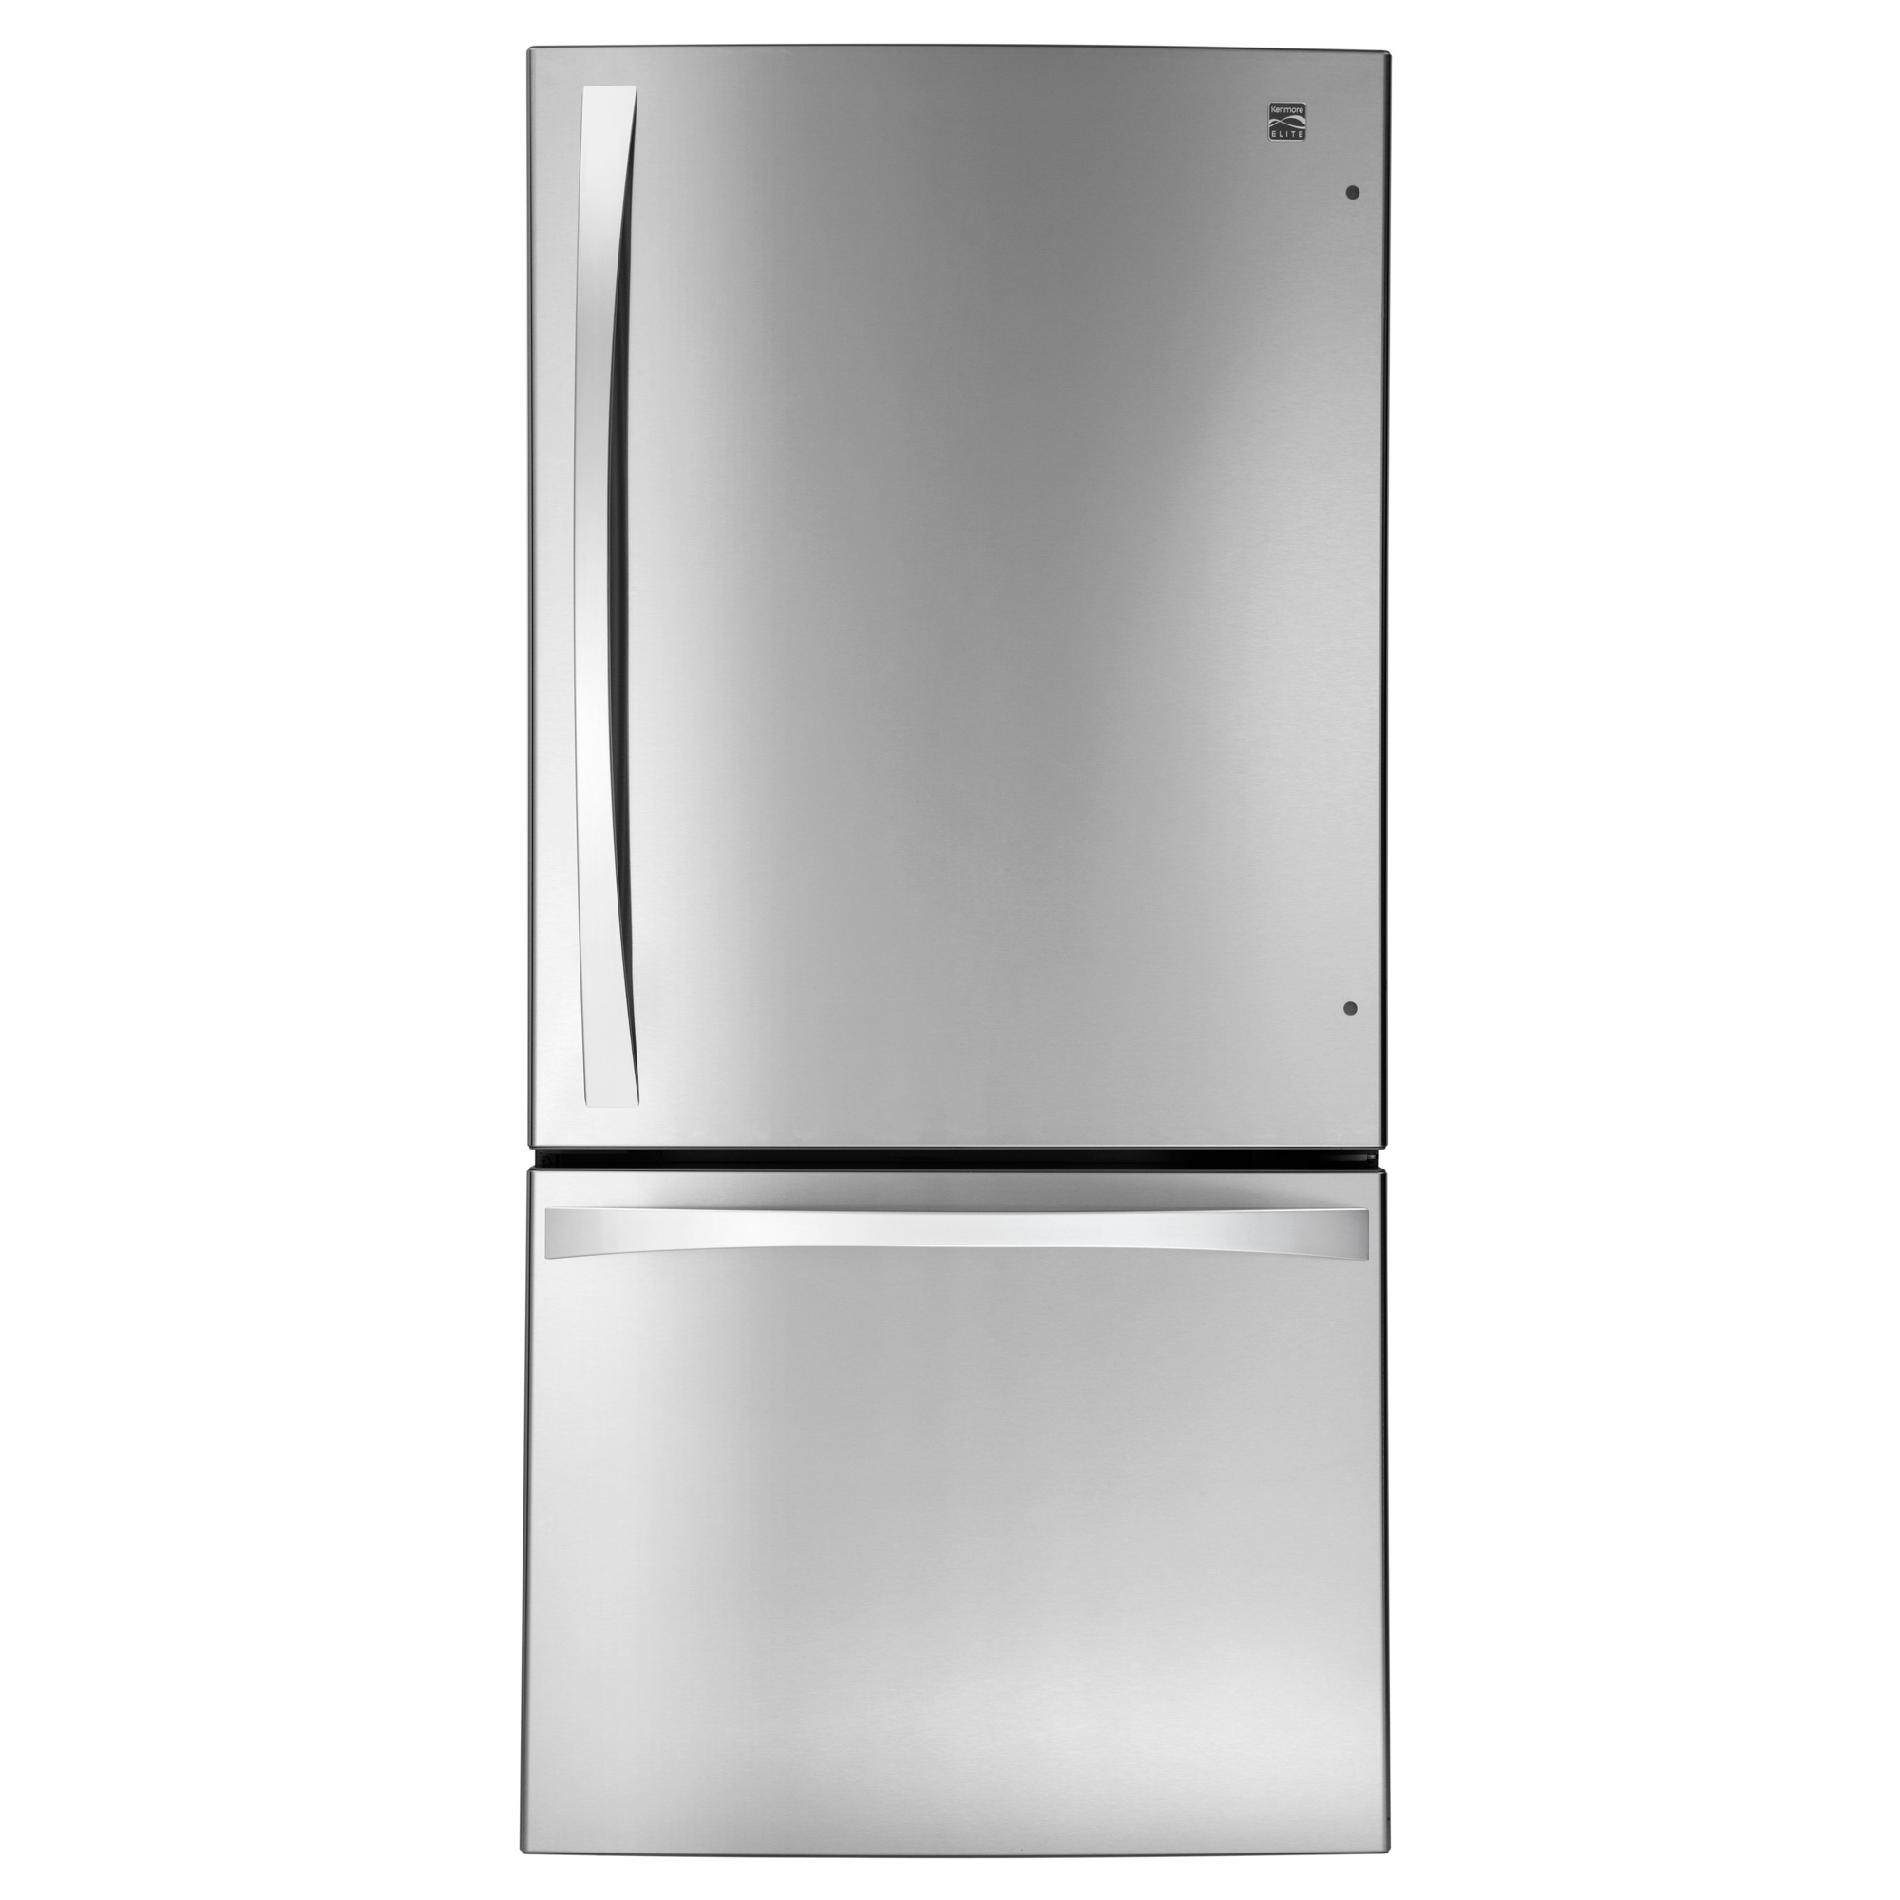 Kenmore Elite Kenmore Elite 79043 24.1 cu. ft. Bottom-Freezer Refrigerator - Stainless Steel